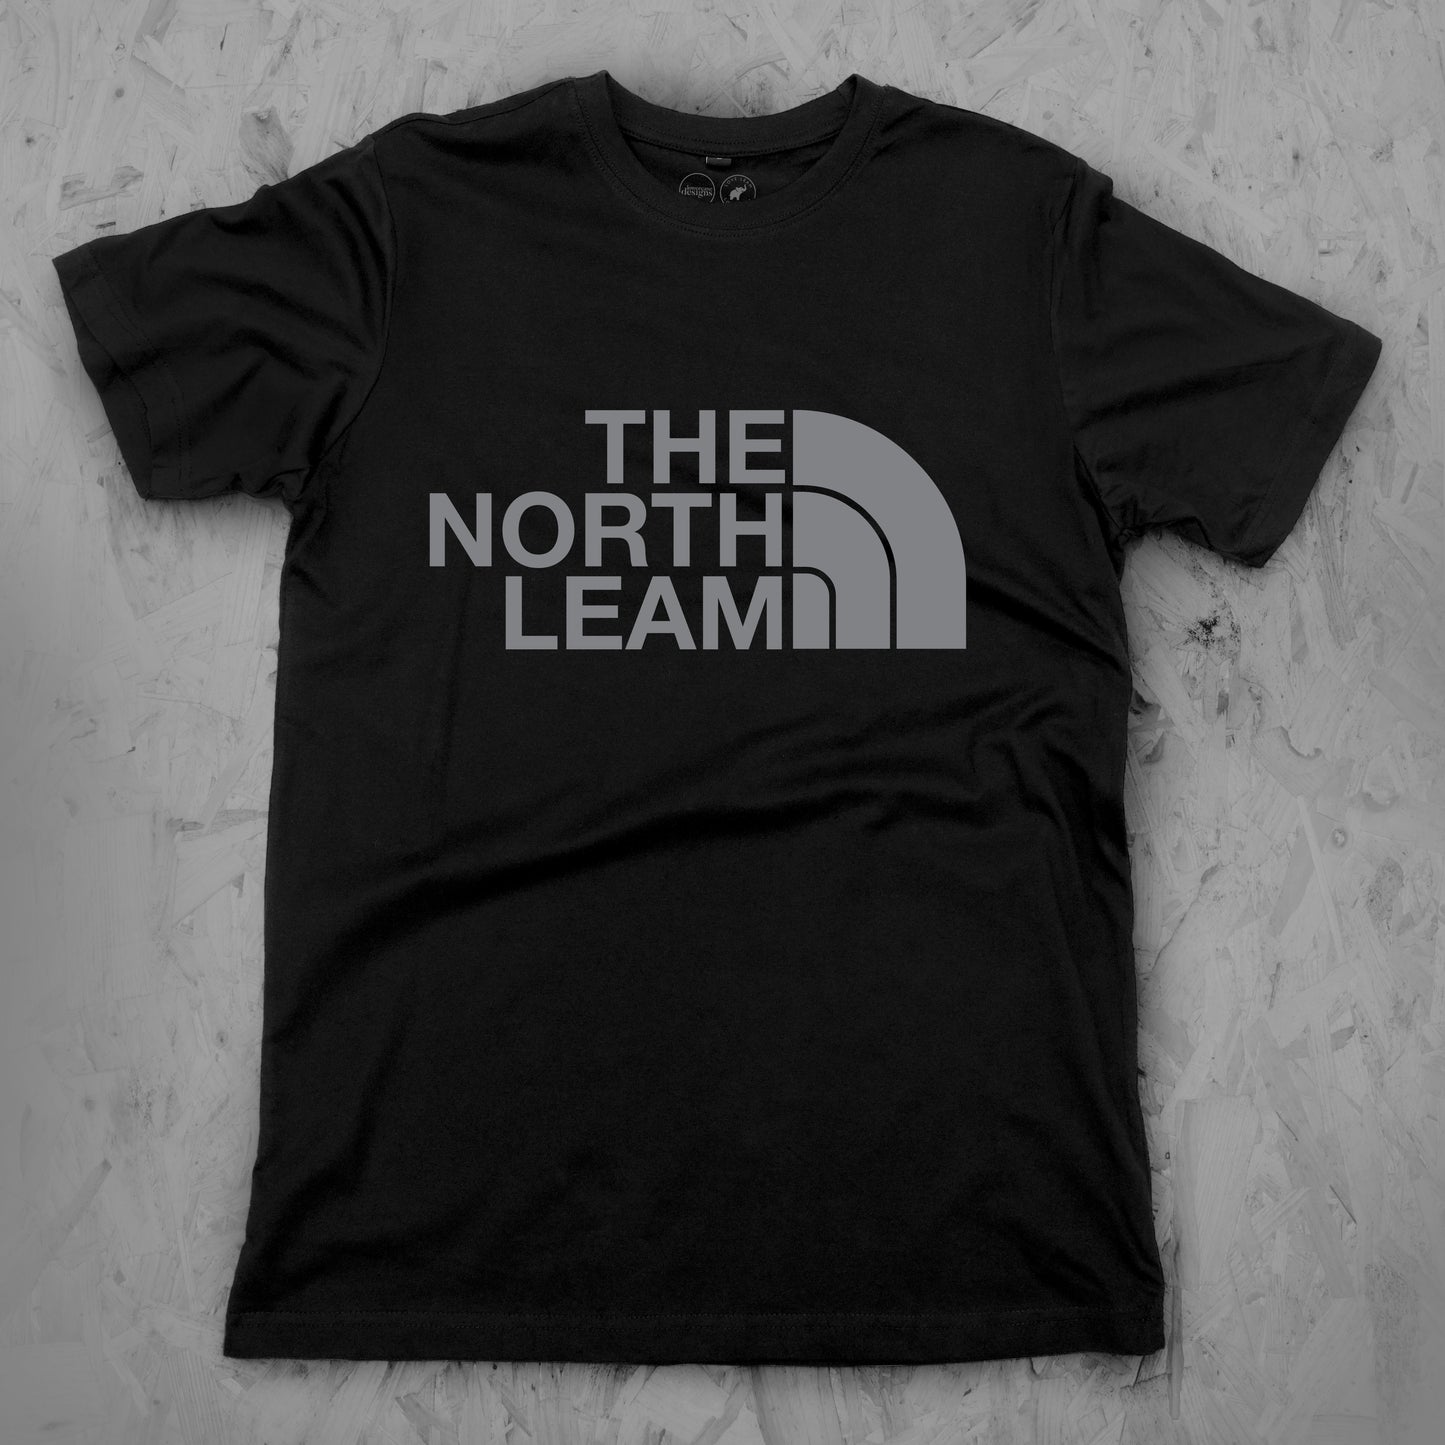 The North Leam Tee